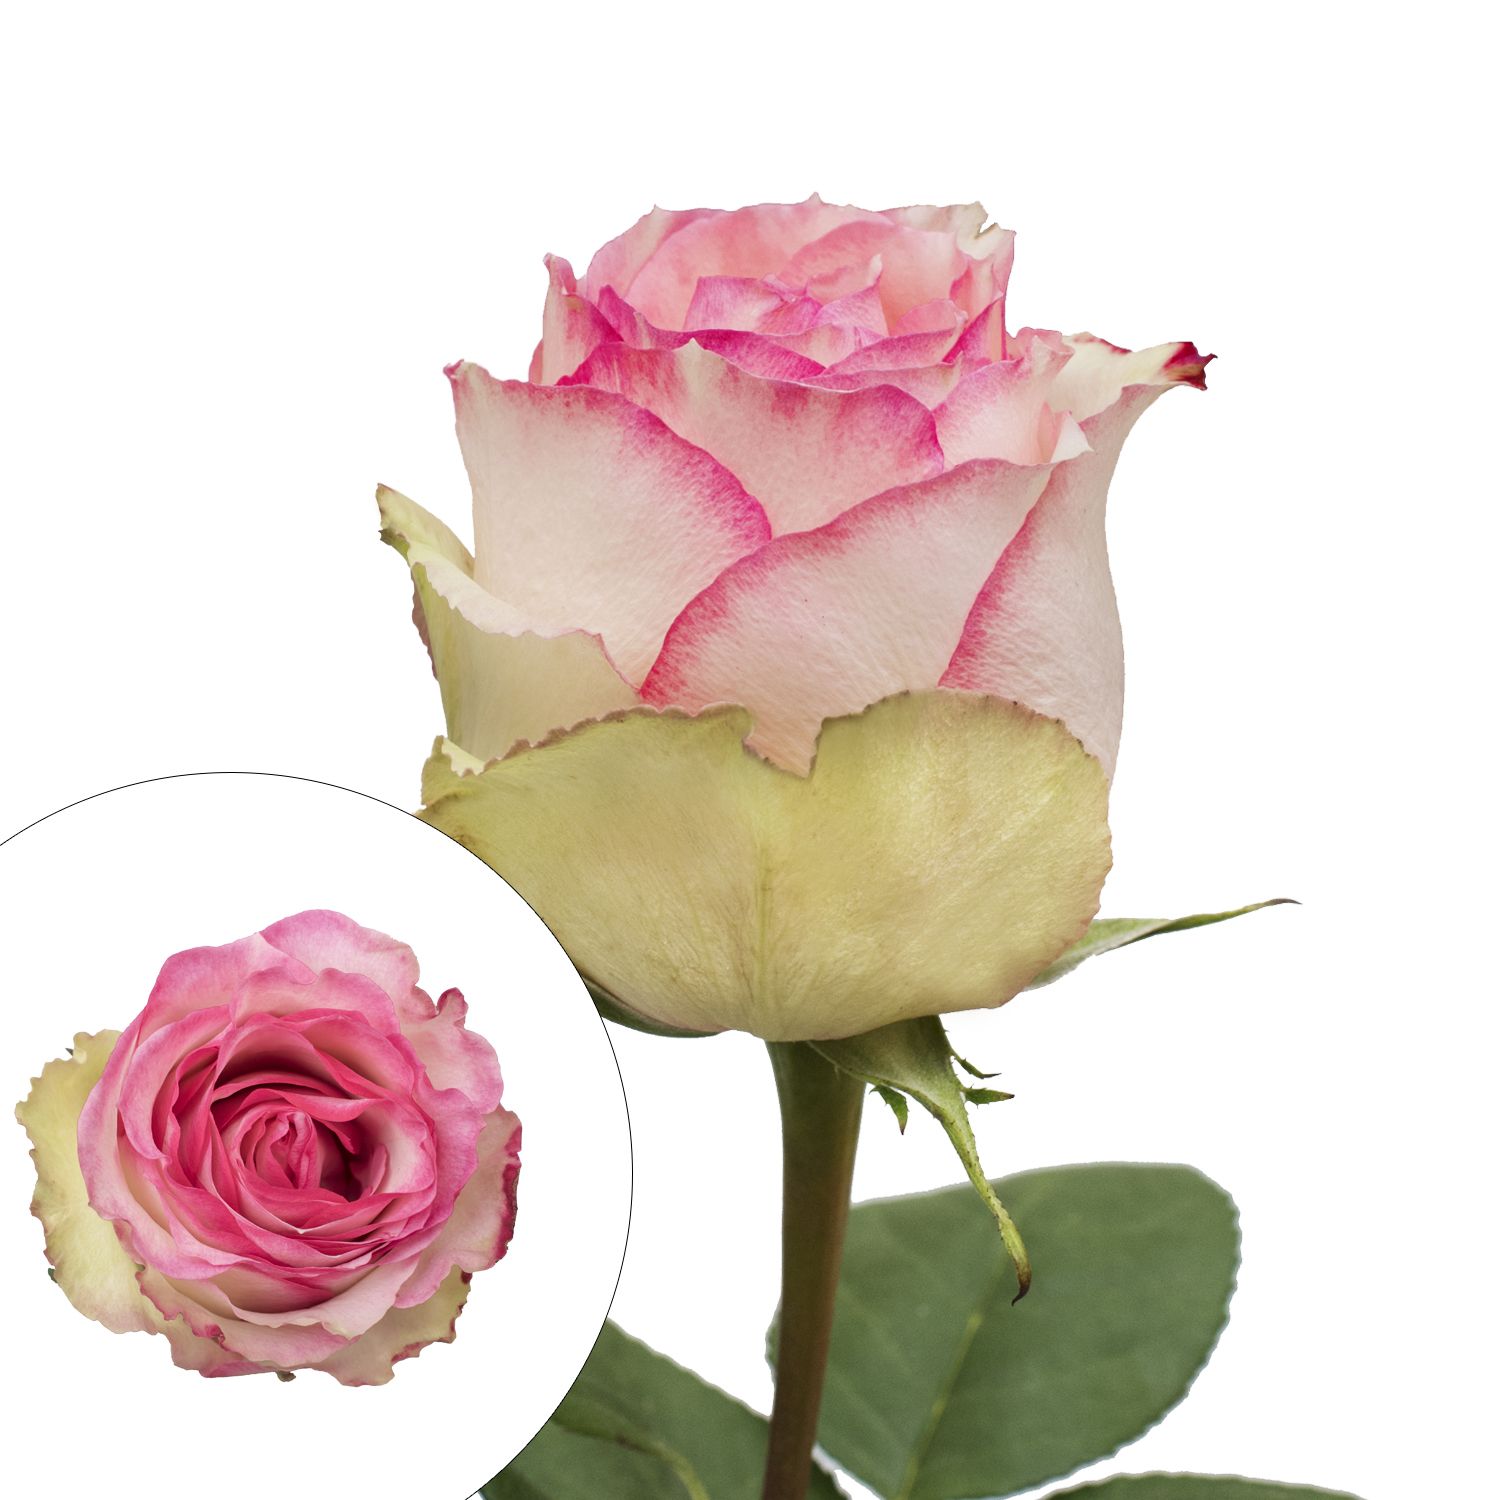 Carnation Wedding Assortment, 100/100 - White, Light Pink